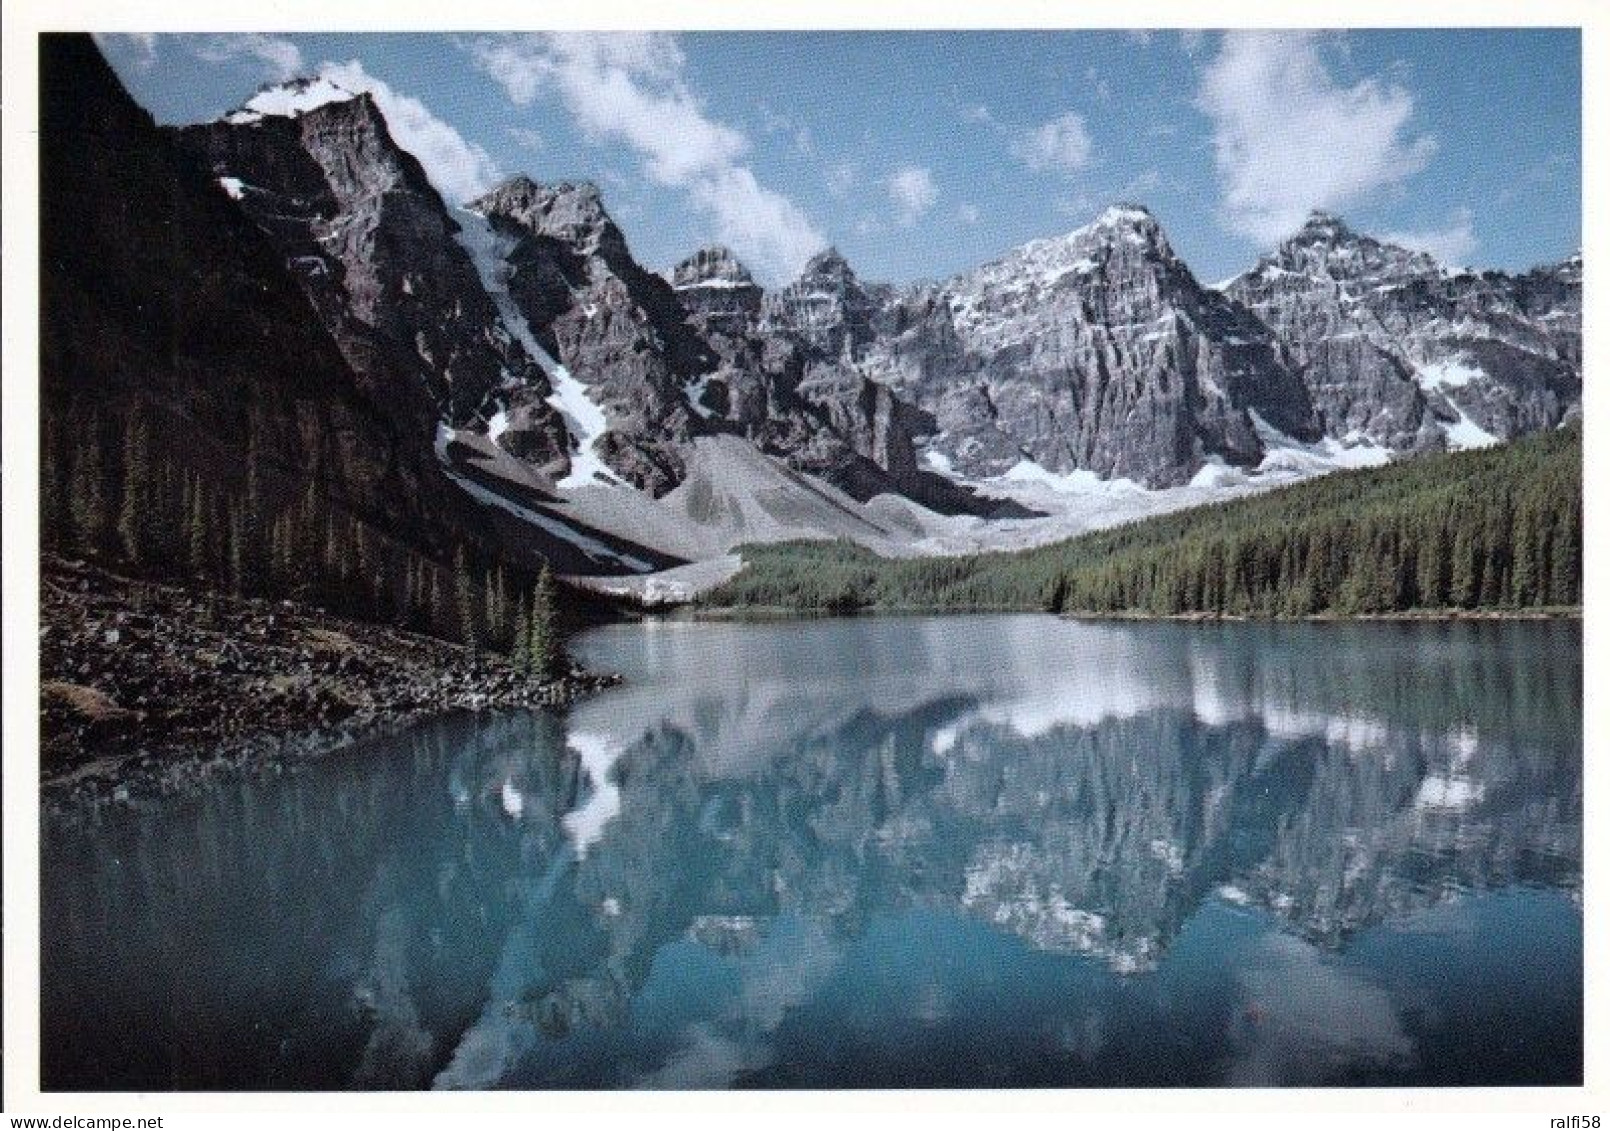 4 AK Kanada / Alberta * Moraine Lake Im Banff-Nationalpark - 1885 Gegründet, Der älteste Nationalpark In Kanada - UNESCO - Banff